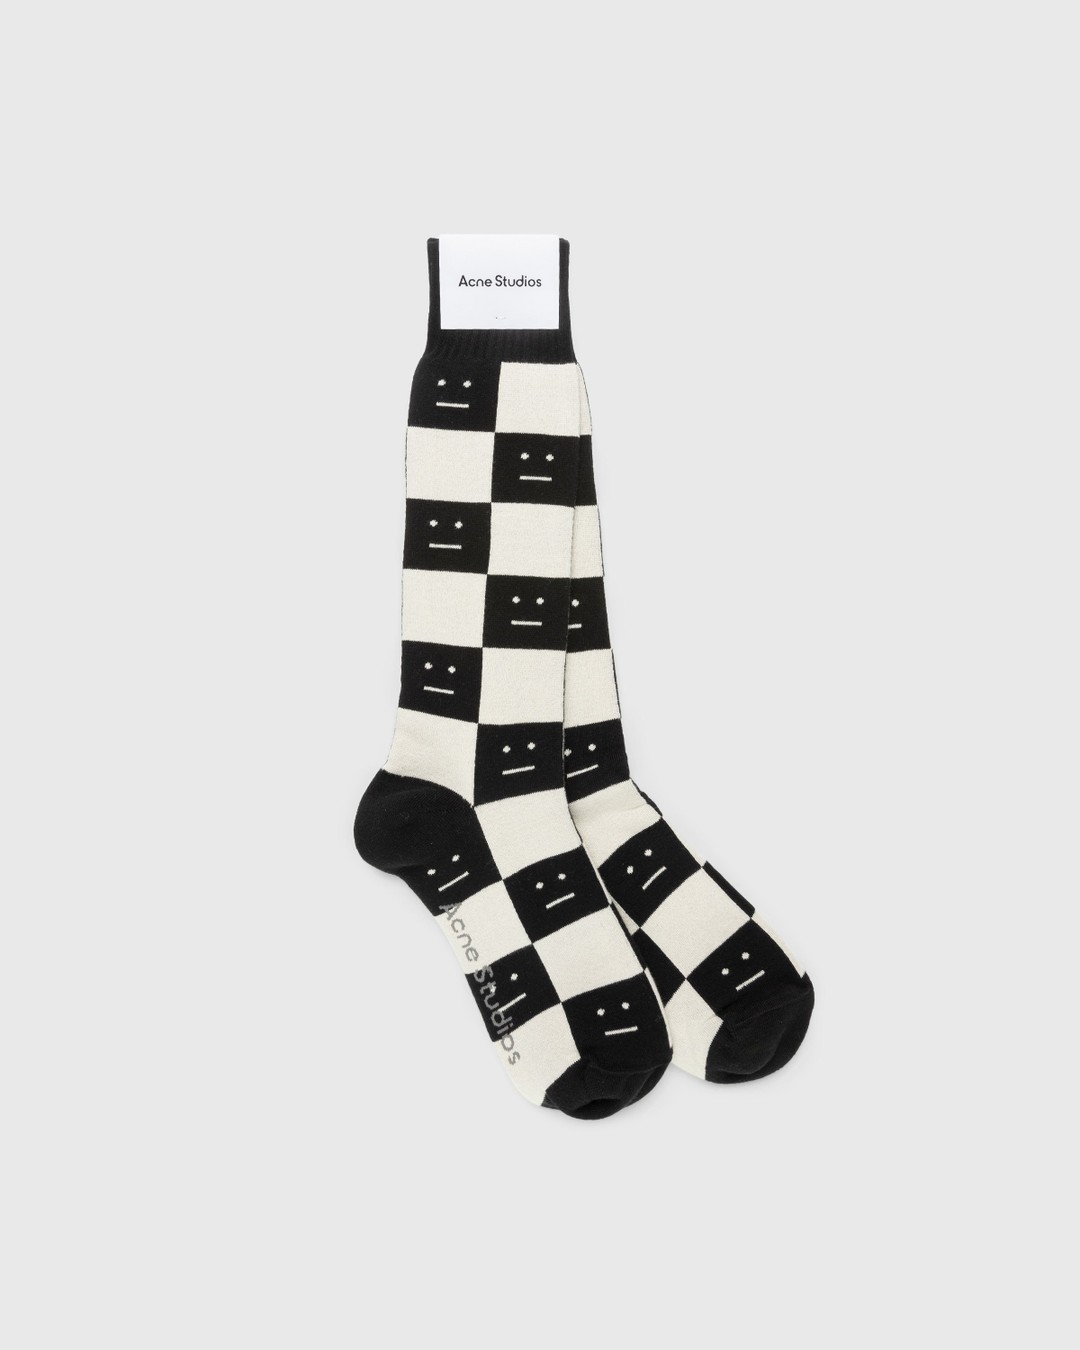 Acne Studios – Checkerboard Socks Black/Oatmeal Beige - Socks - Black - Image 2